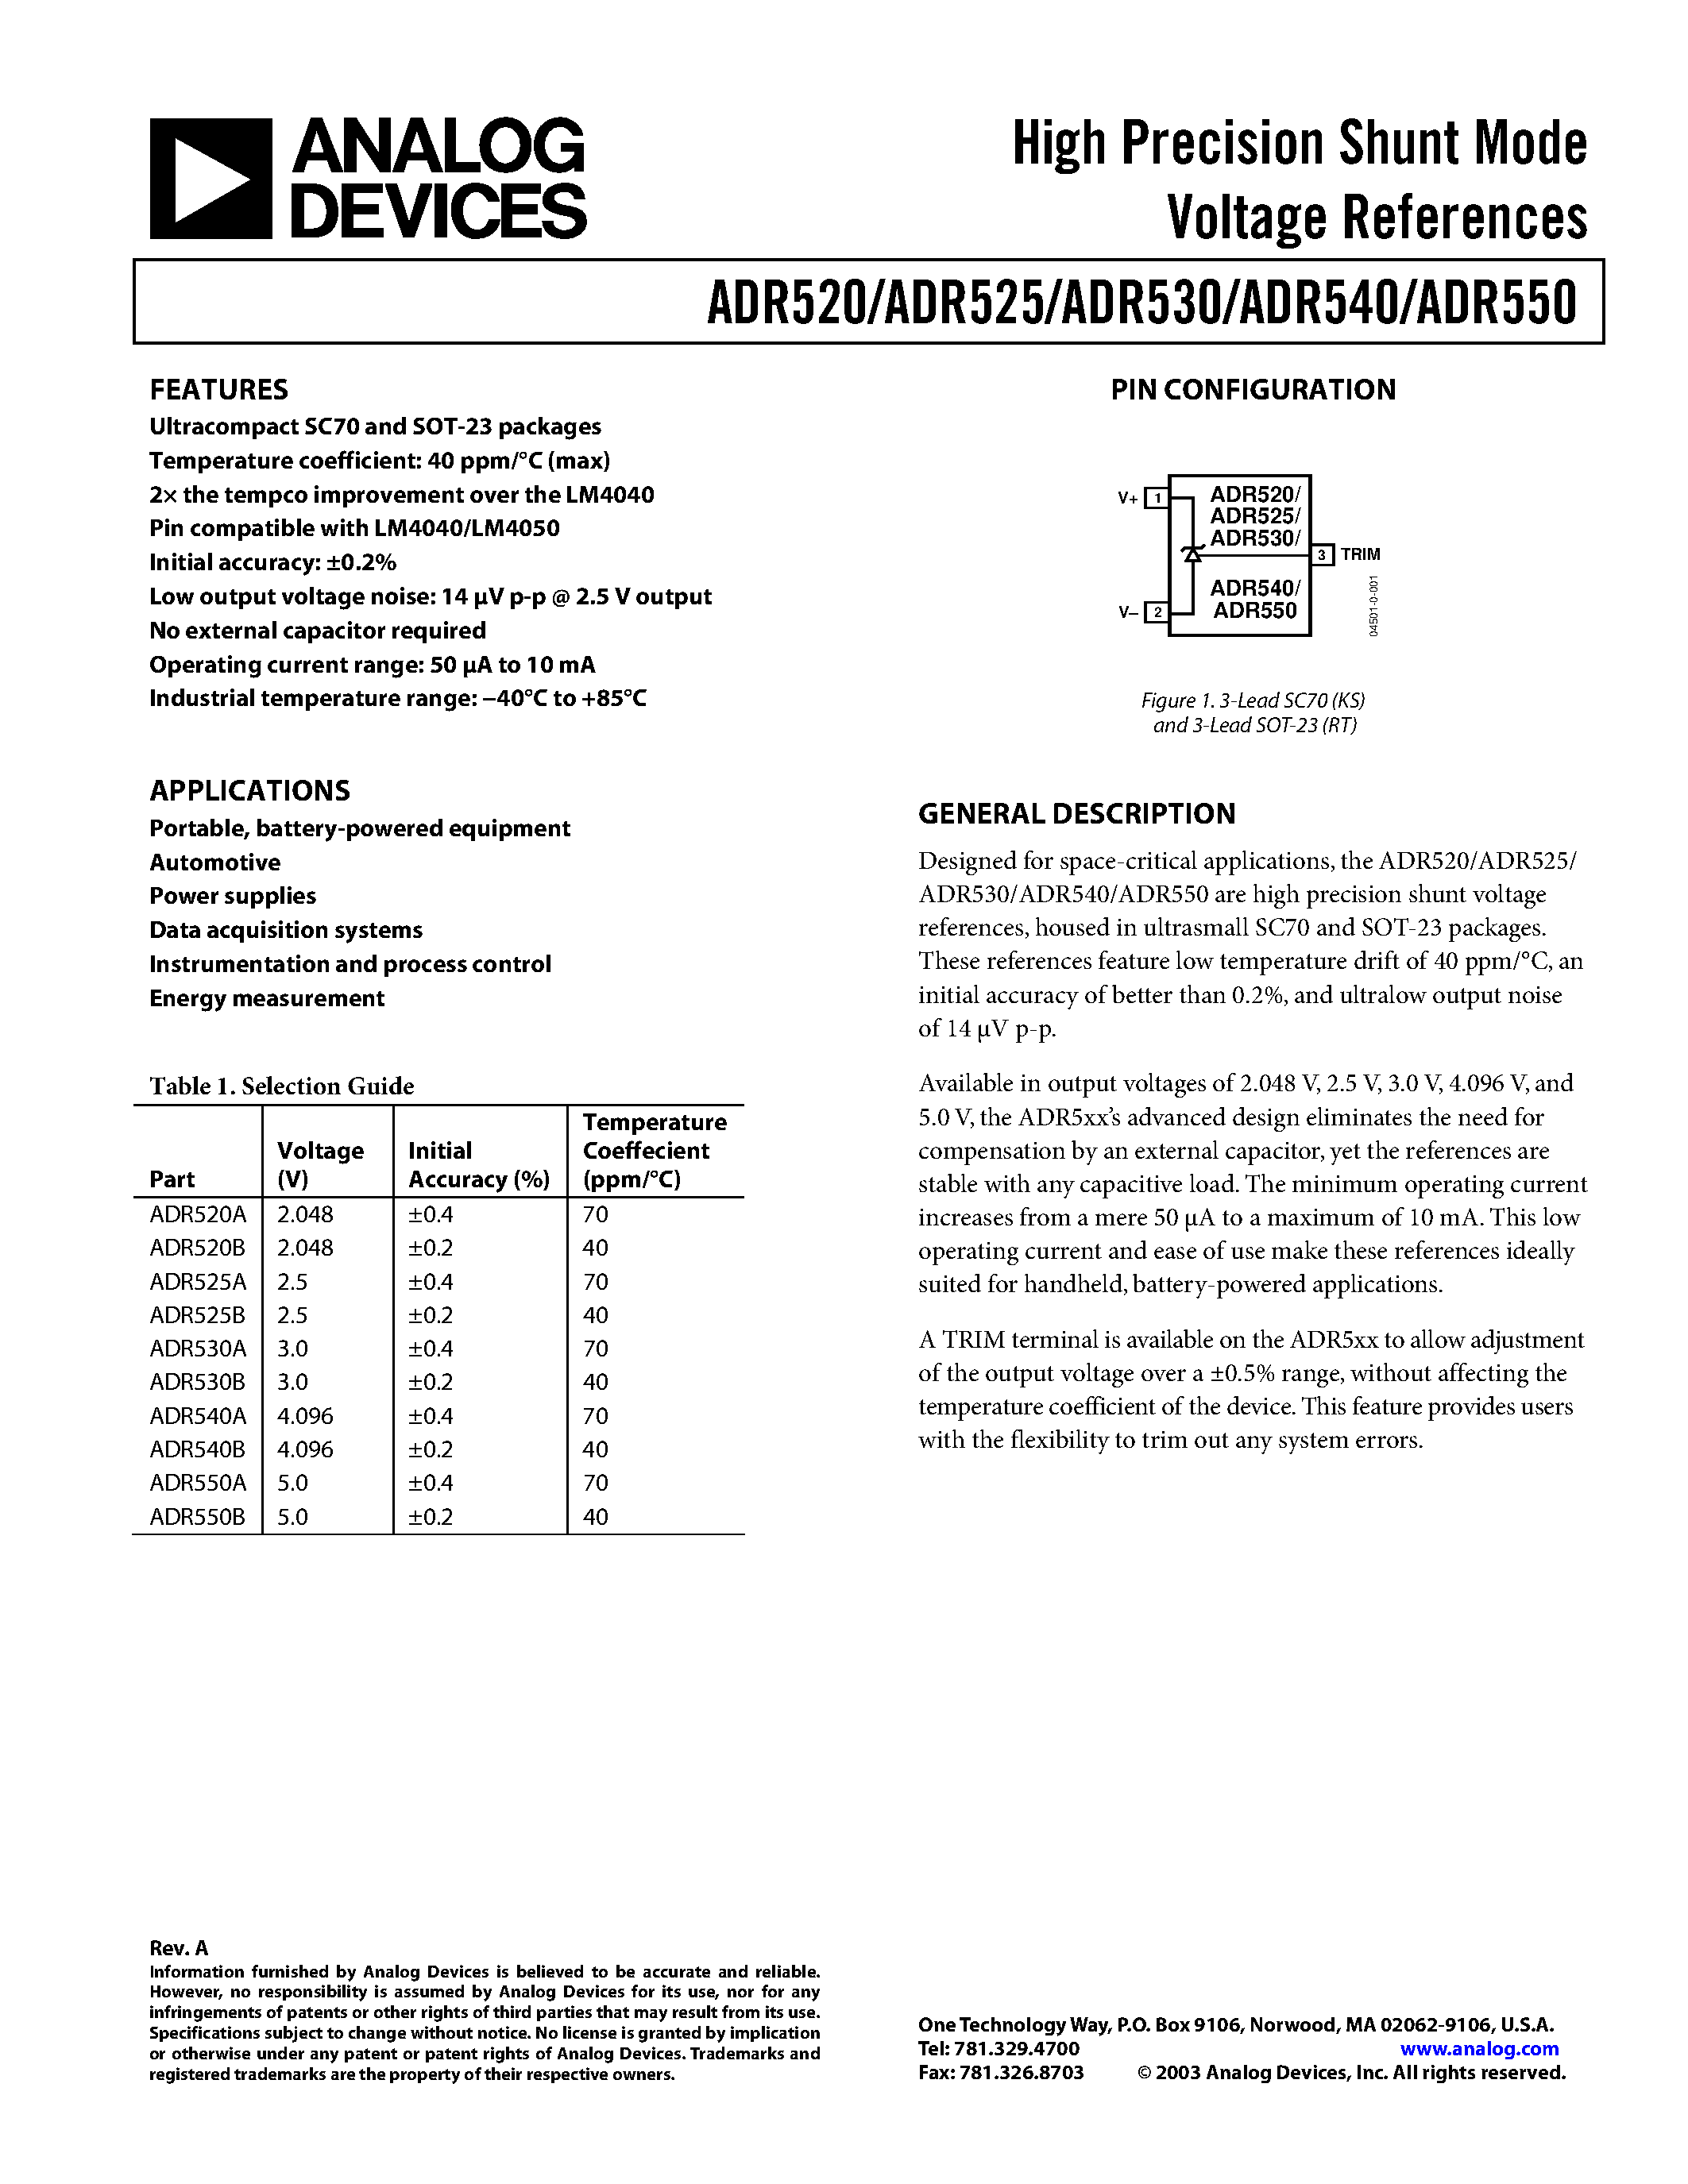 Даташит ADR540 - High Precision Shunt Mode Voltage References страница 1